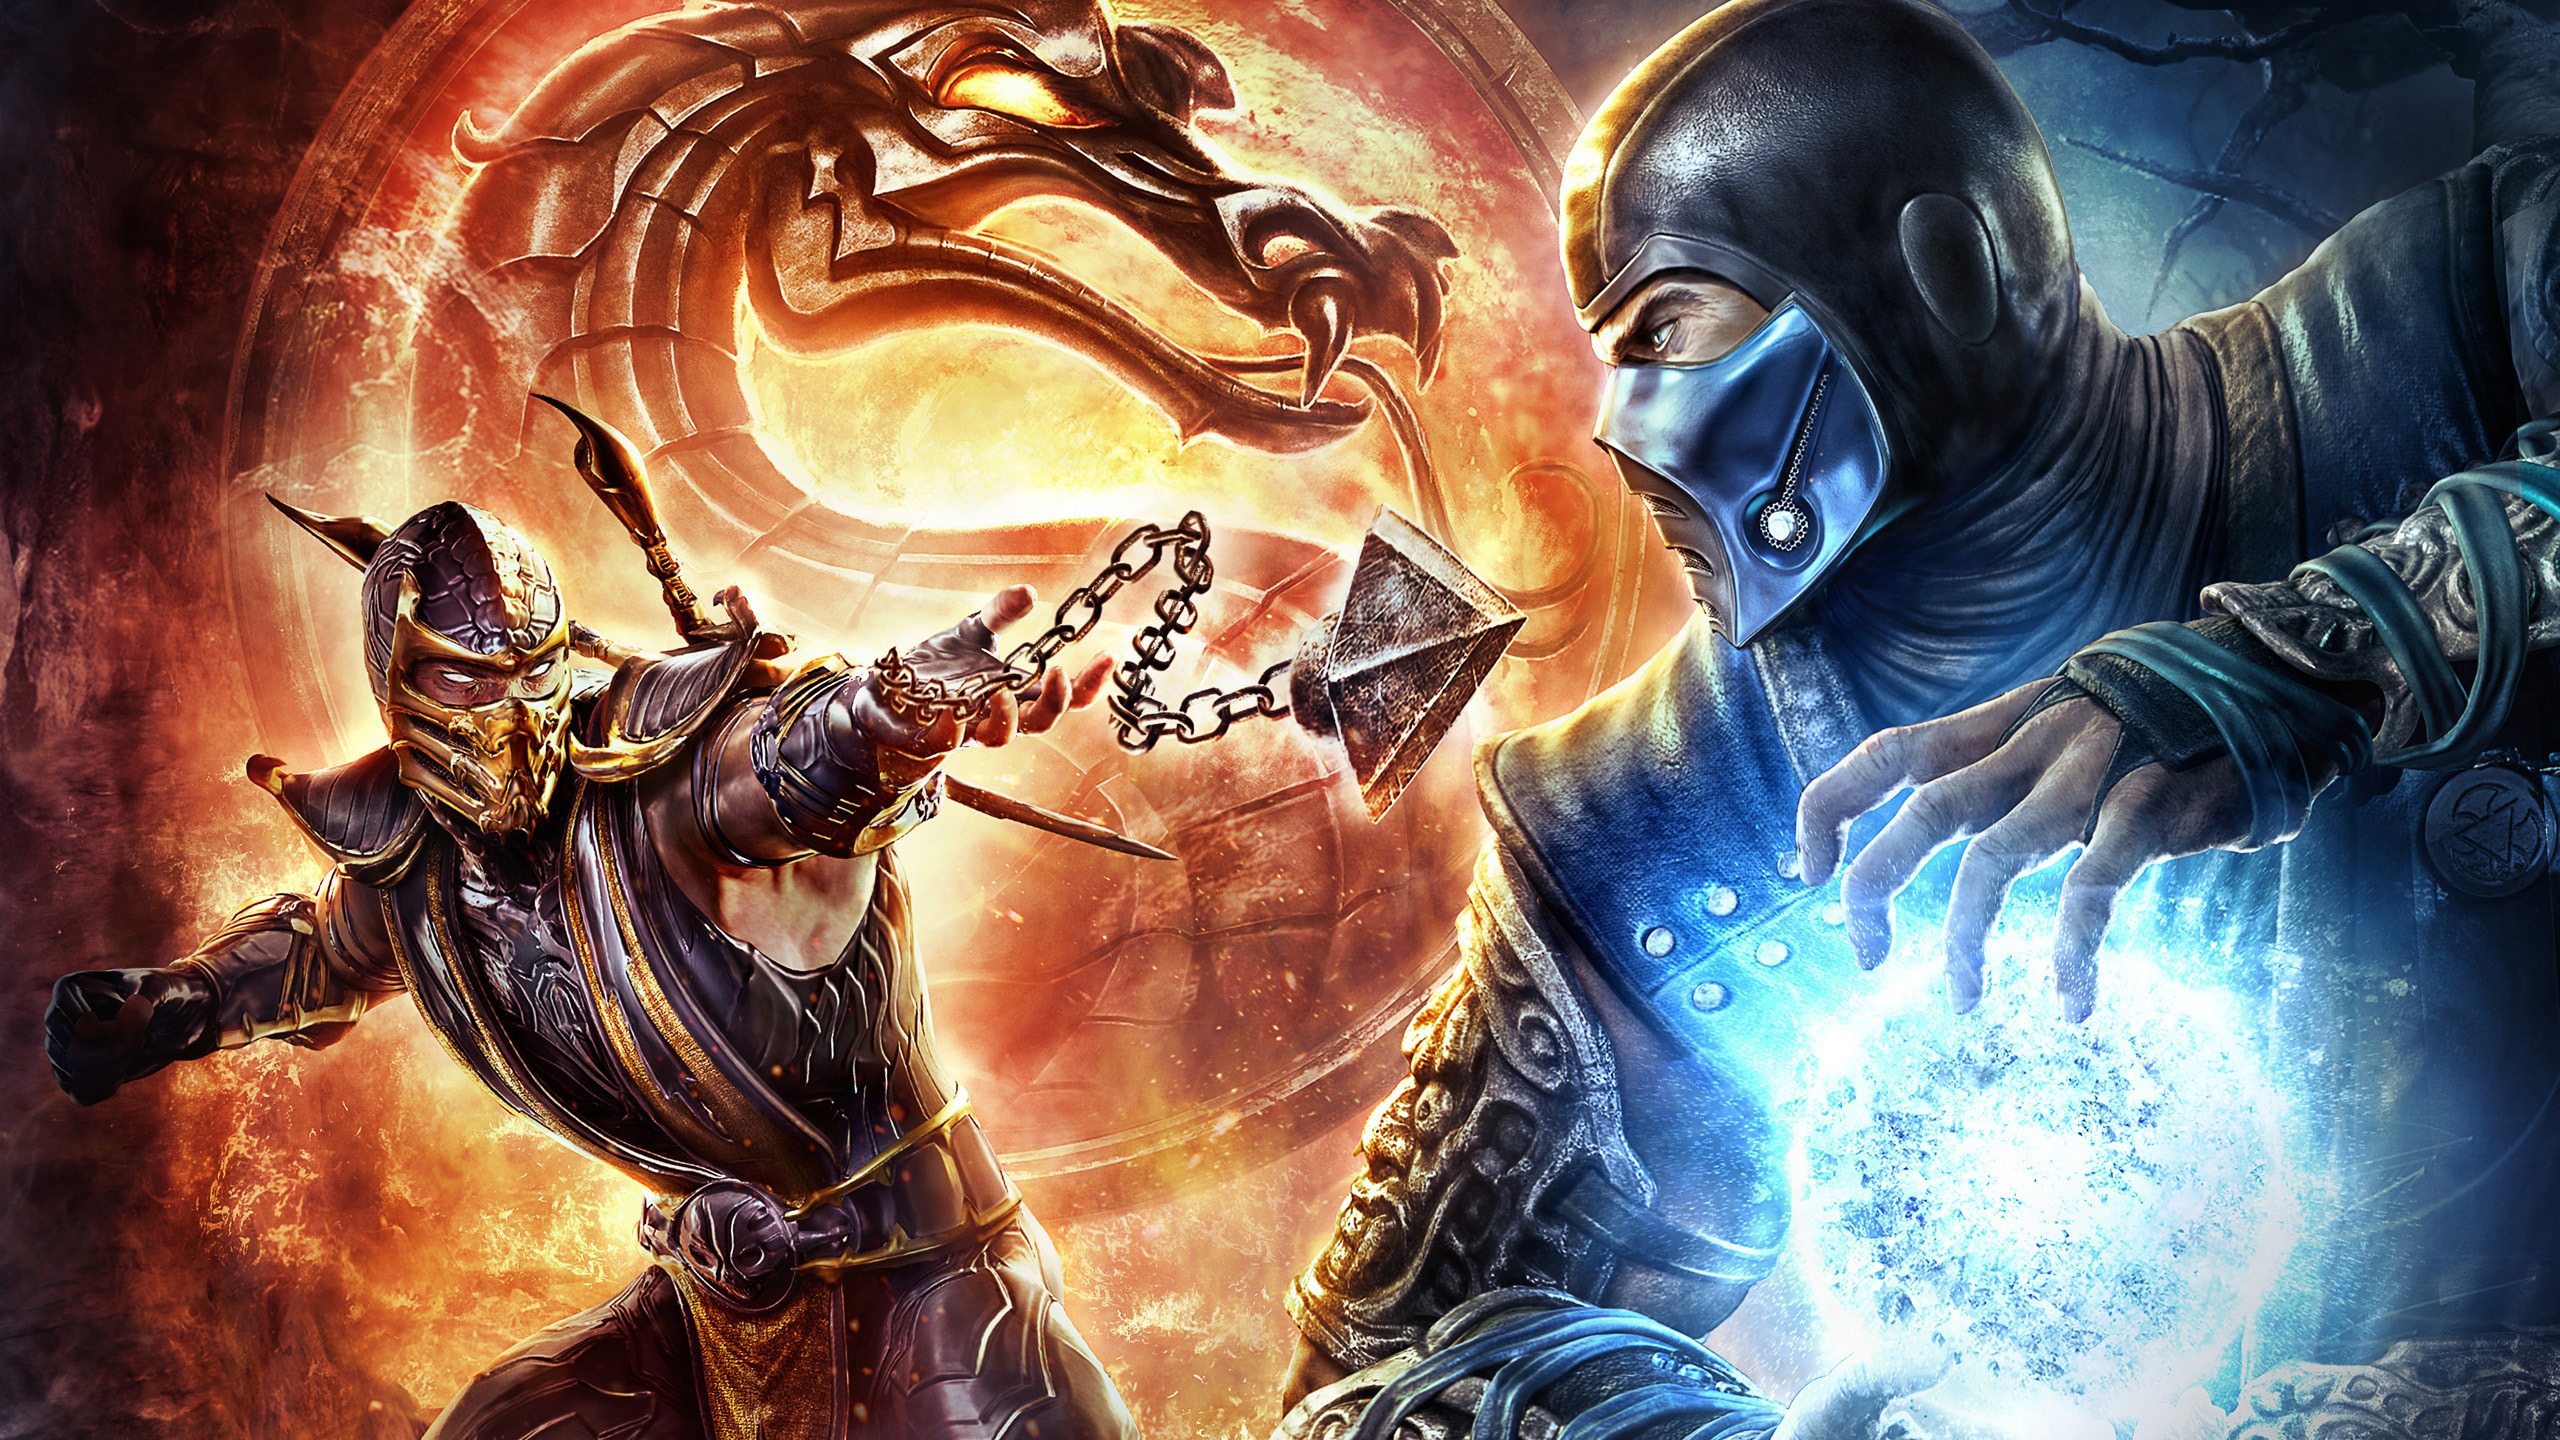 Scorpions vs Sub Zero Mortal Kombat for 2560x1440 HDTV resolution